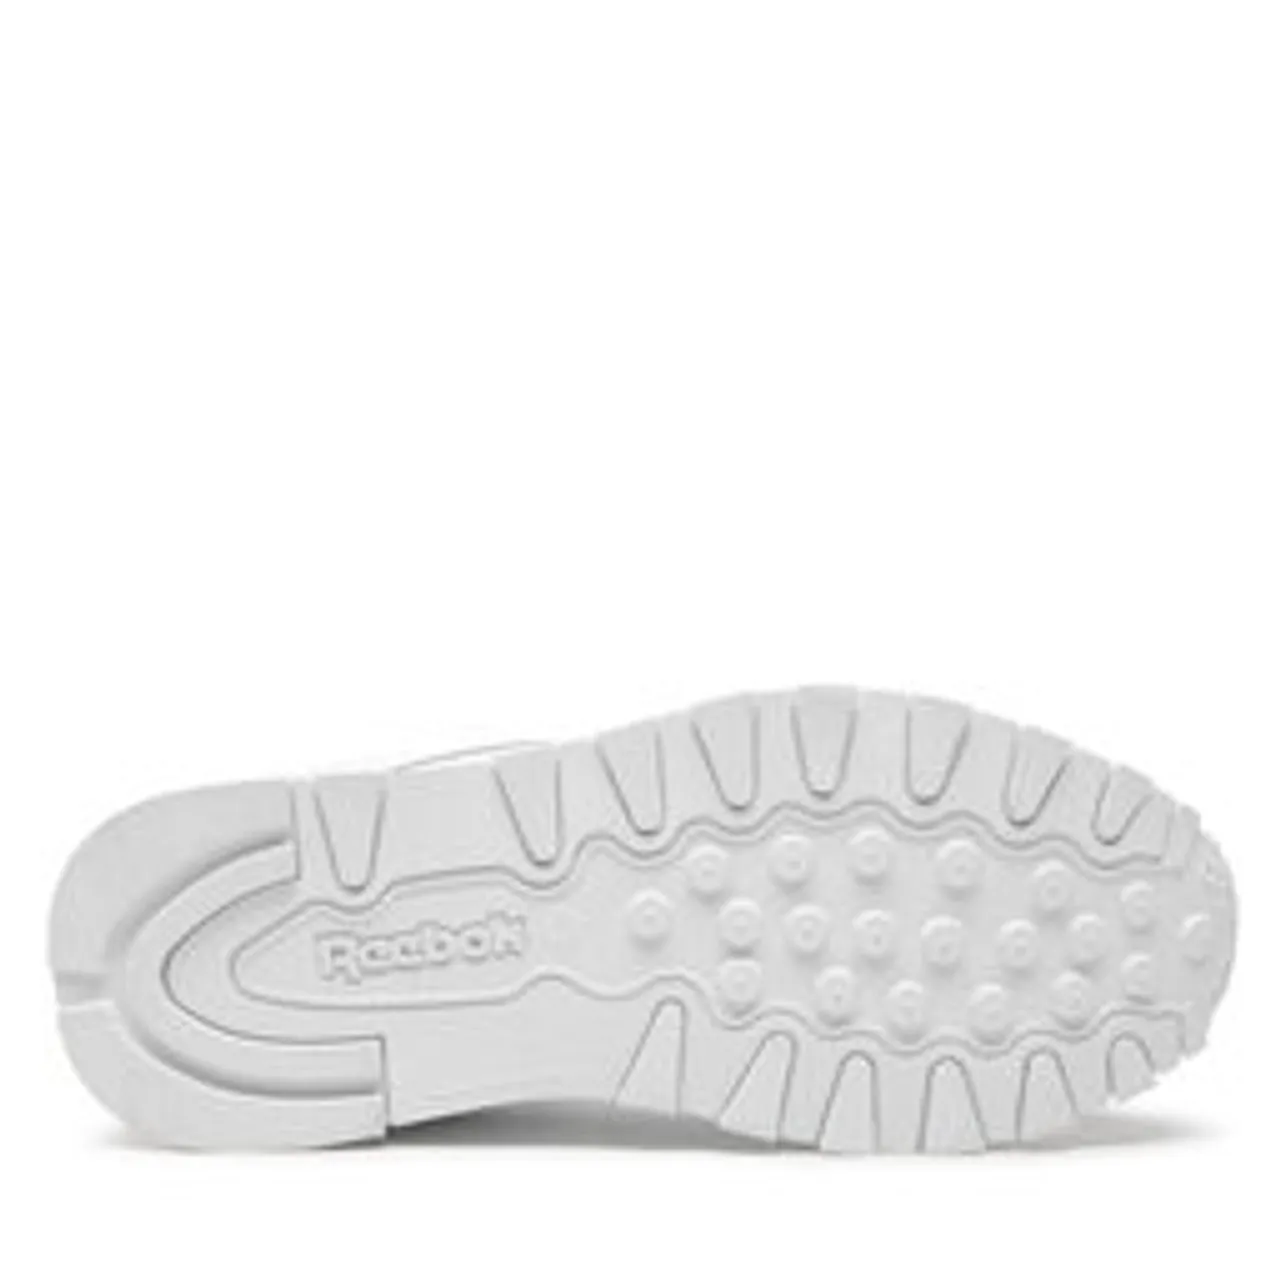 Schuhe Reebok Classic Leather 50172 White